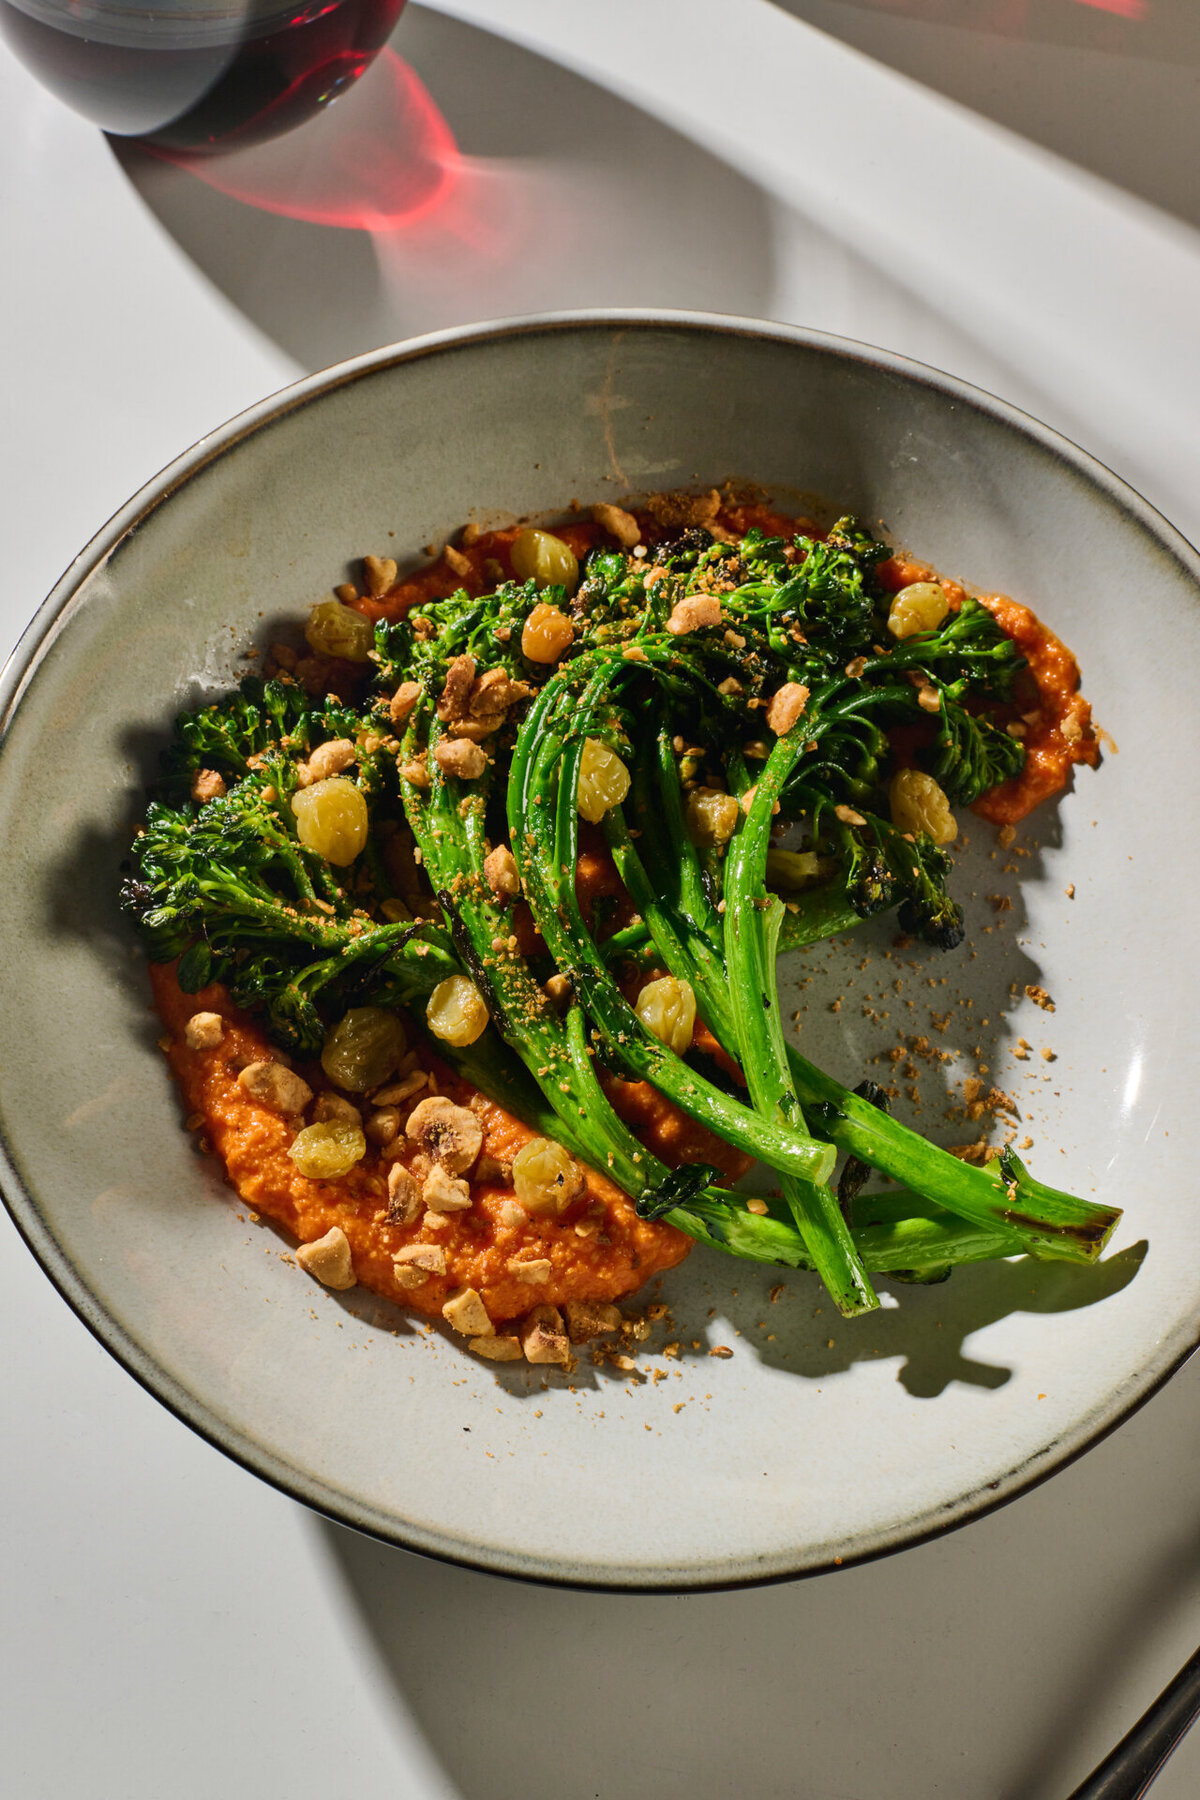 broccoli rabe dish from donna jean sherman oaks vegan restaurant